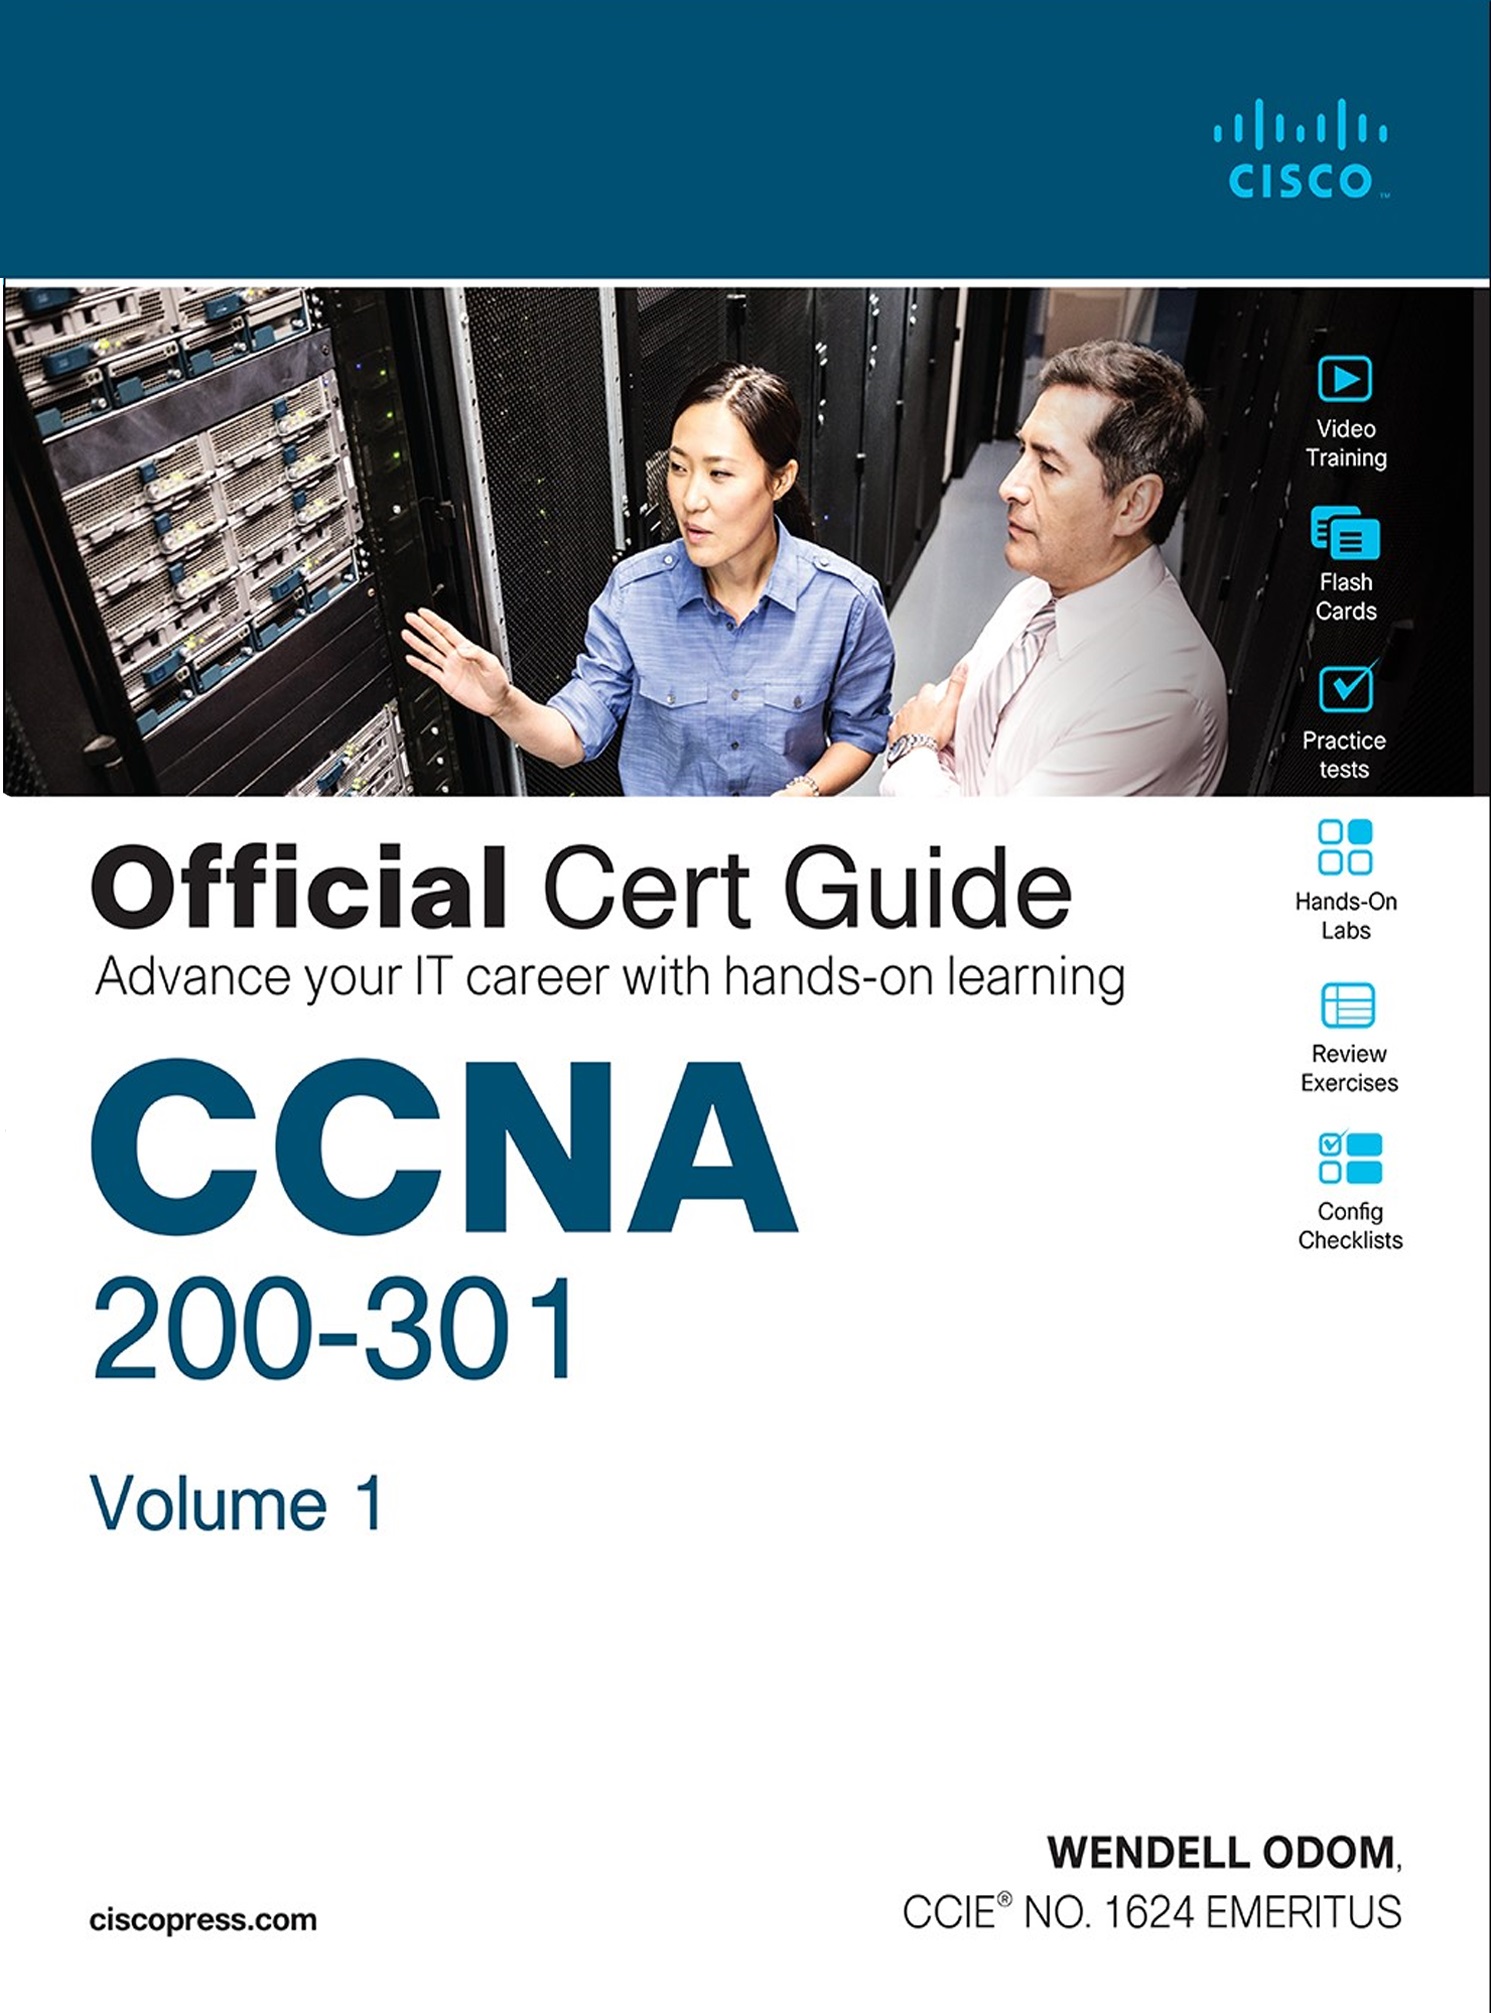 CCNA 200-301 Official Cert Guide Volume 1